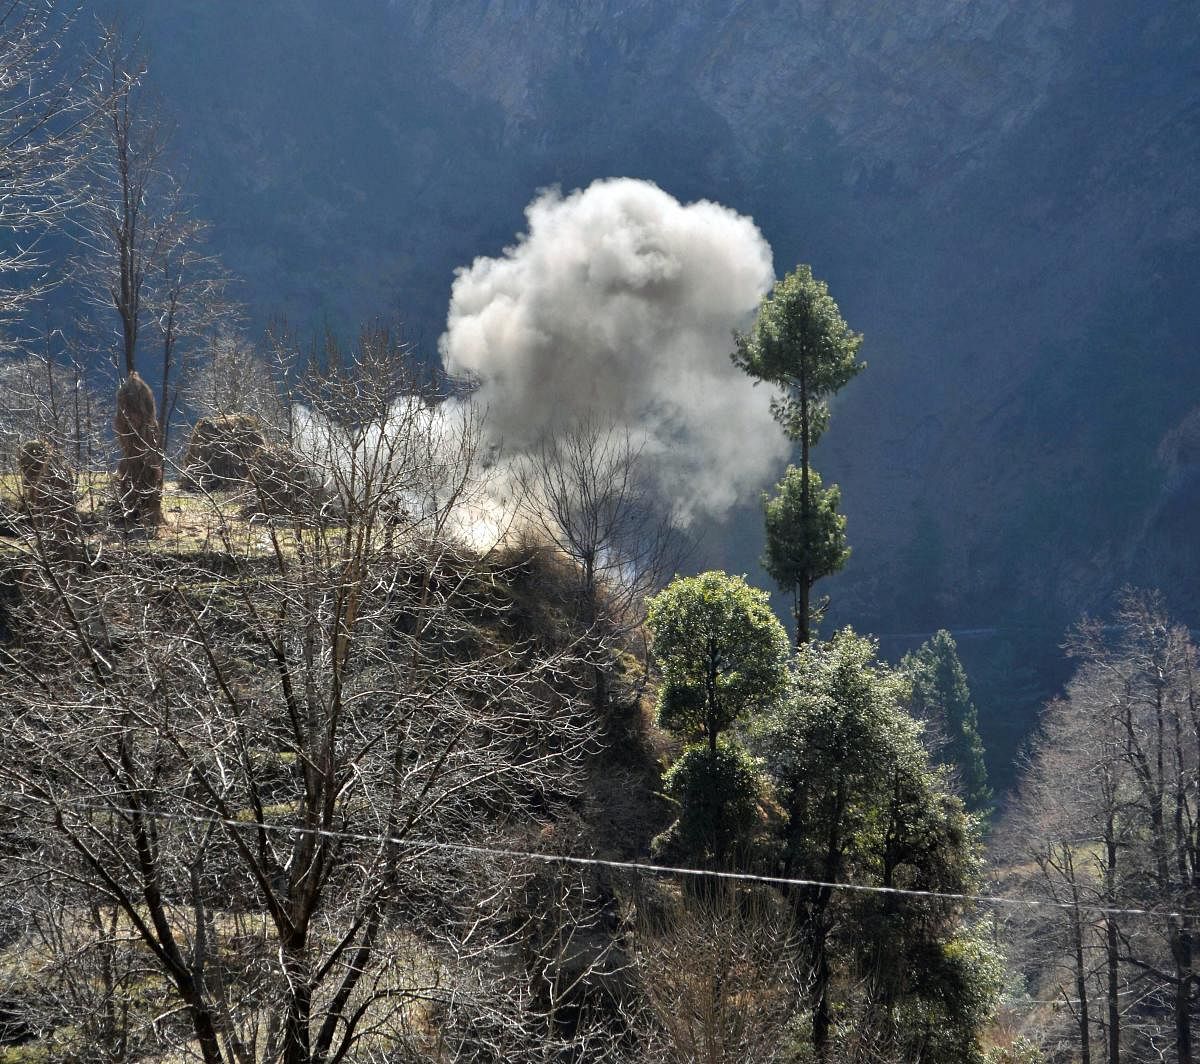 Pakistan violates ceasefire along LoC in J&K's Rajouri